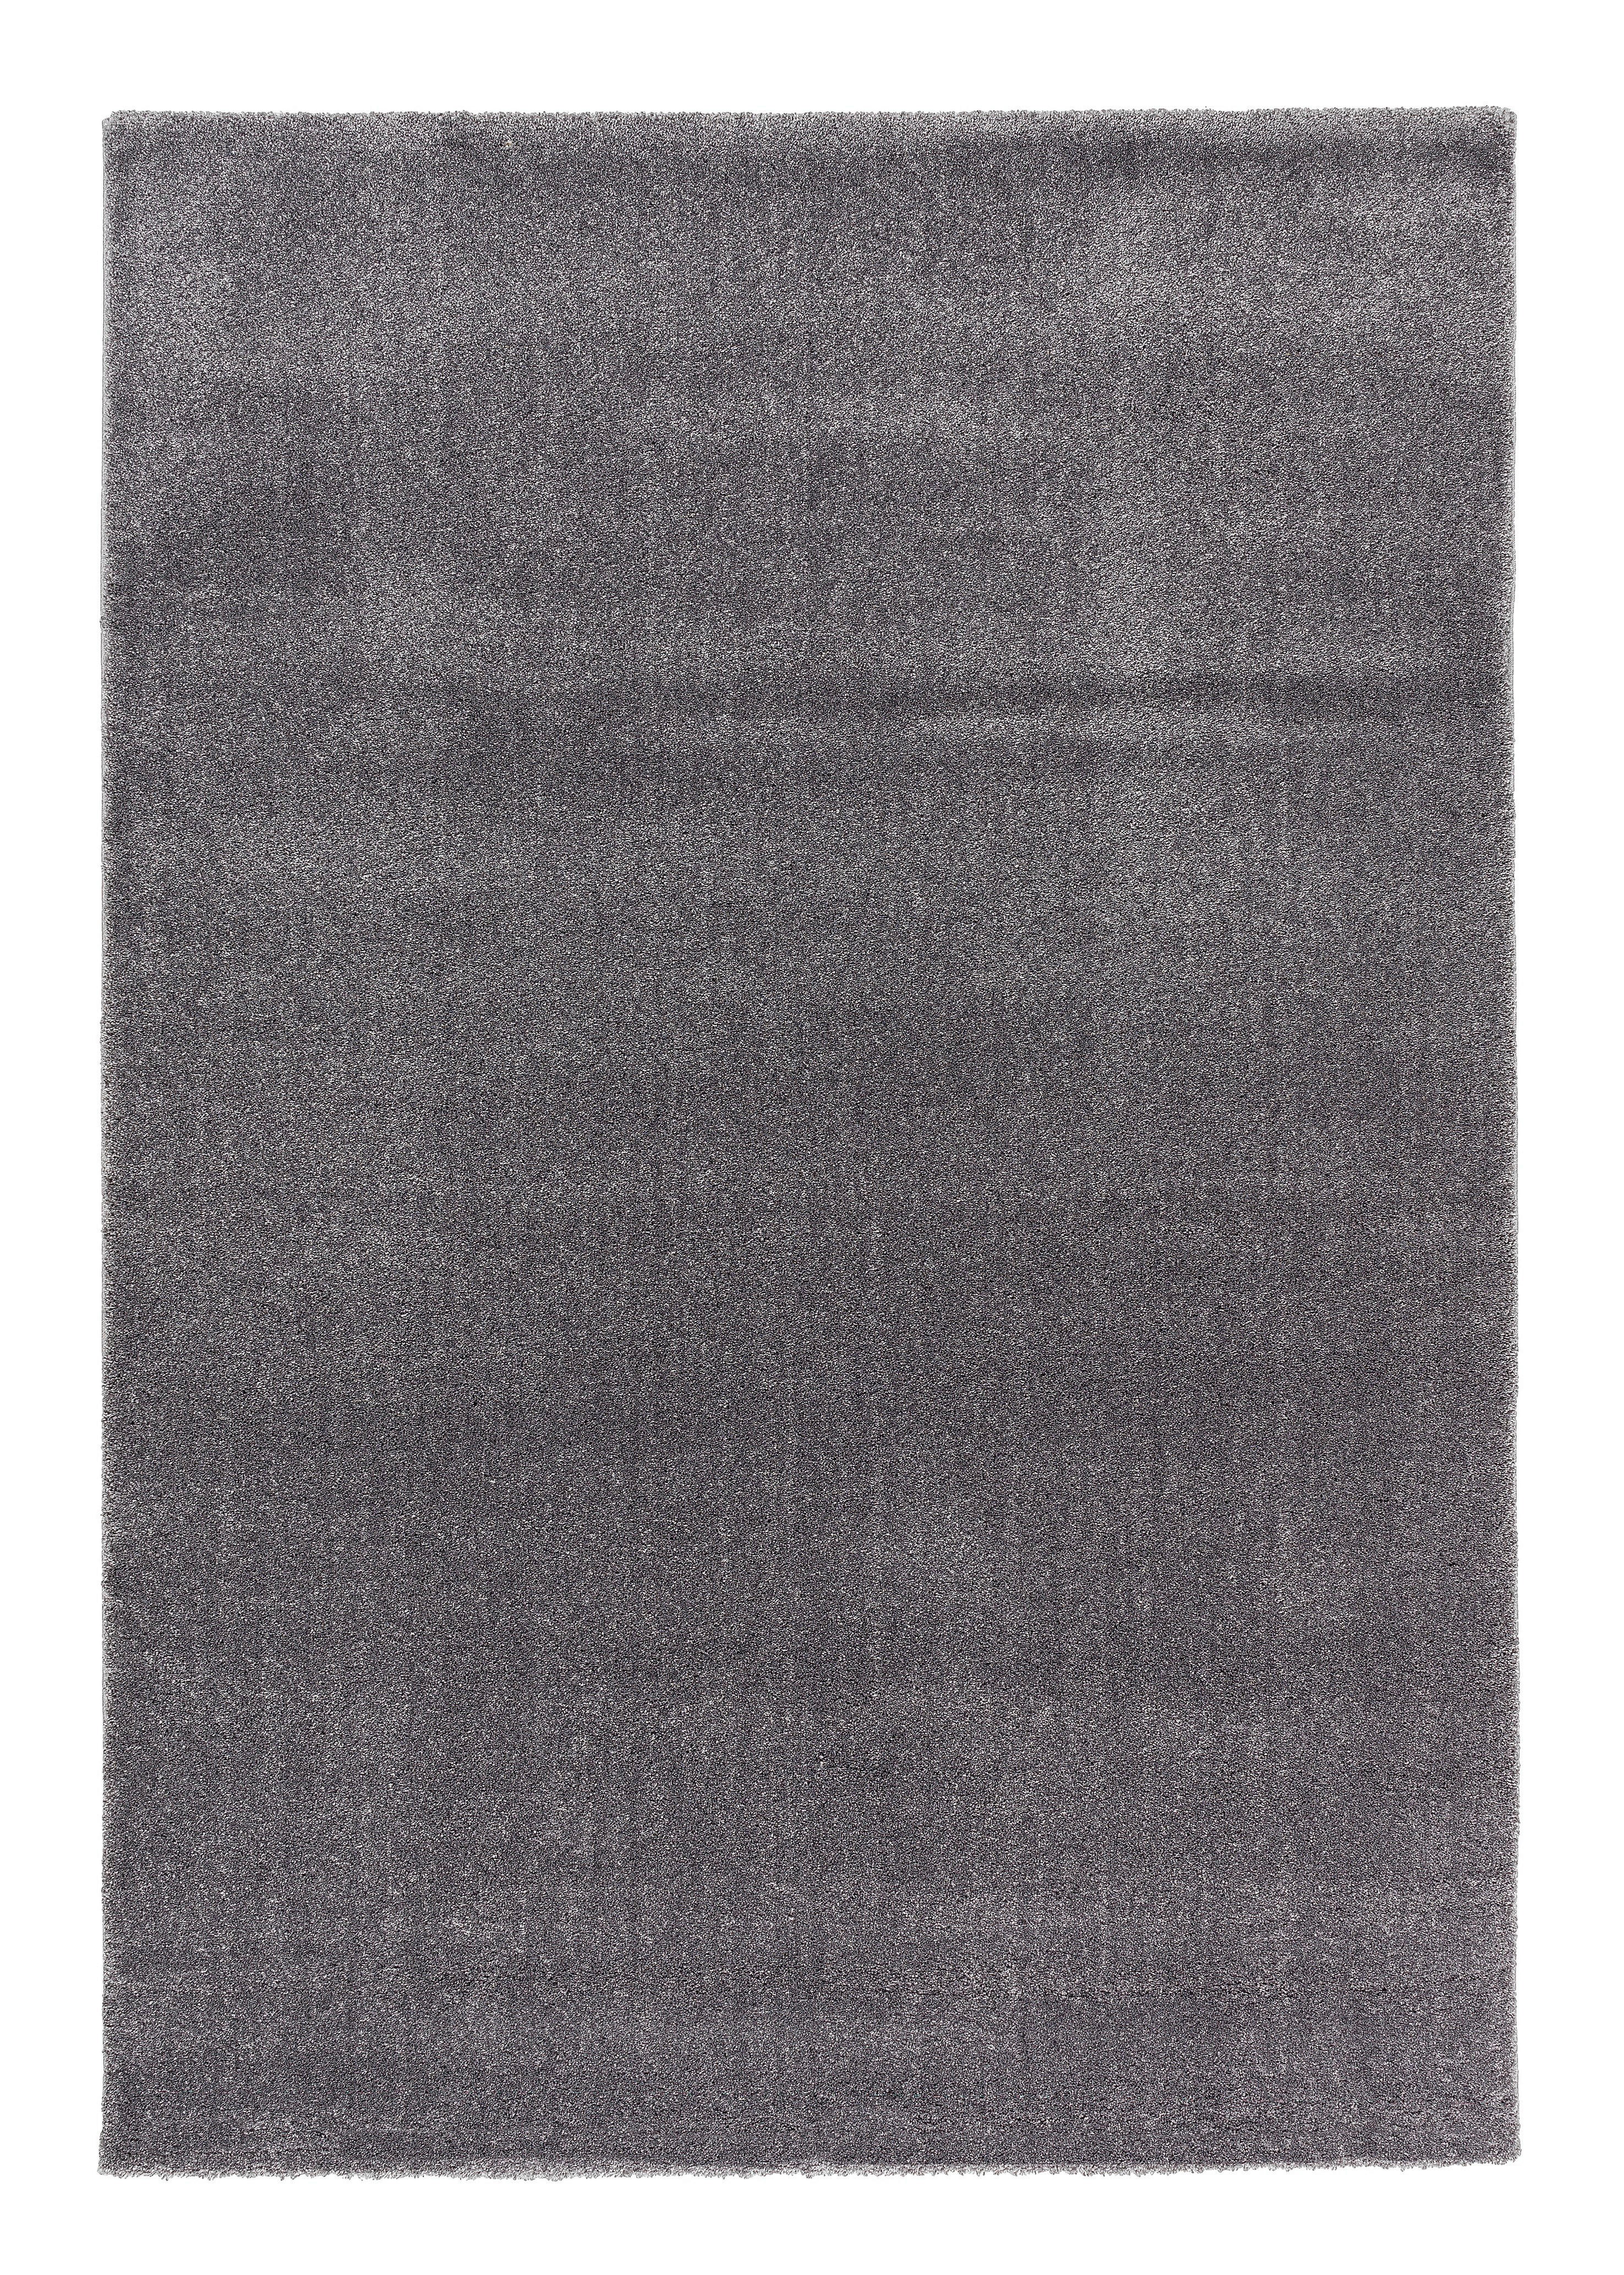 WEBTEPPICH 67/130 cm  - Silberfarben, Design, Textil (67/130cm) - Novel